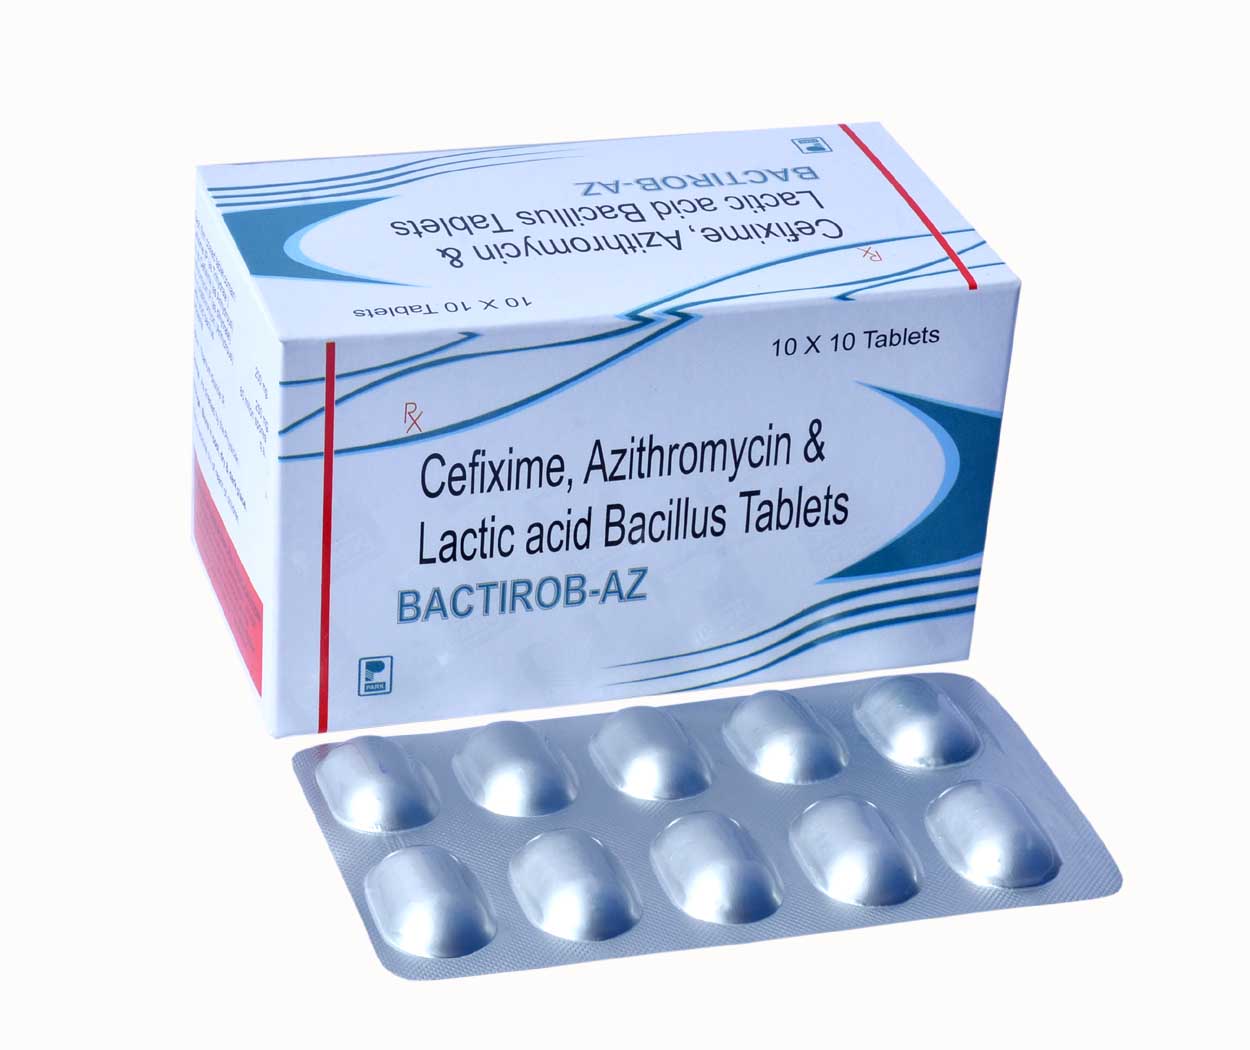 Product Name: BACTIROB AZ, Compositions of BACTIROB AZ are Cefixime, Azithromycin & Lactic acid Bacillus Tablets - Park Pharmaceuticals